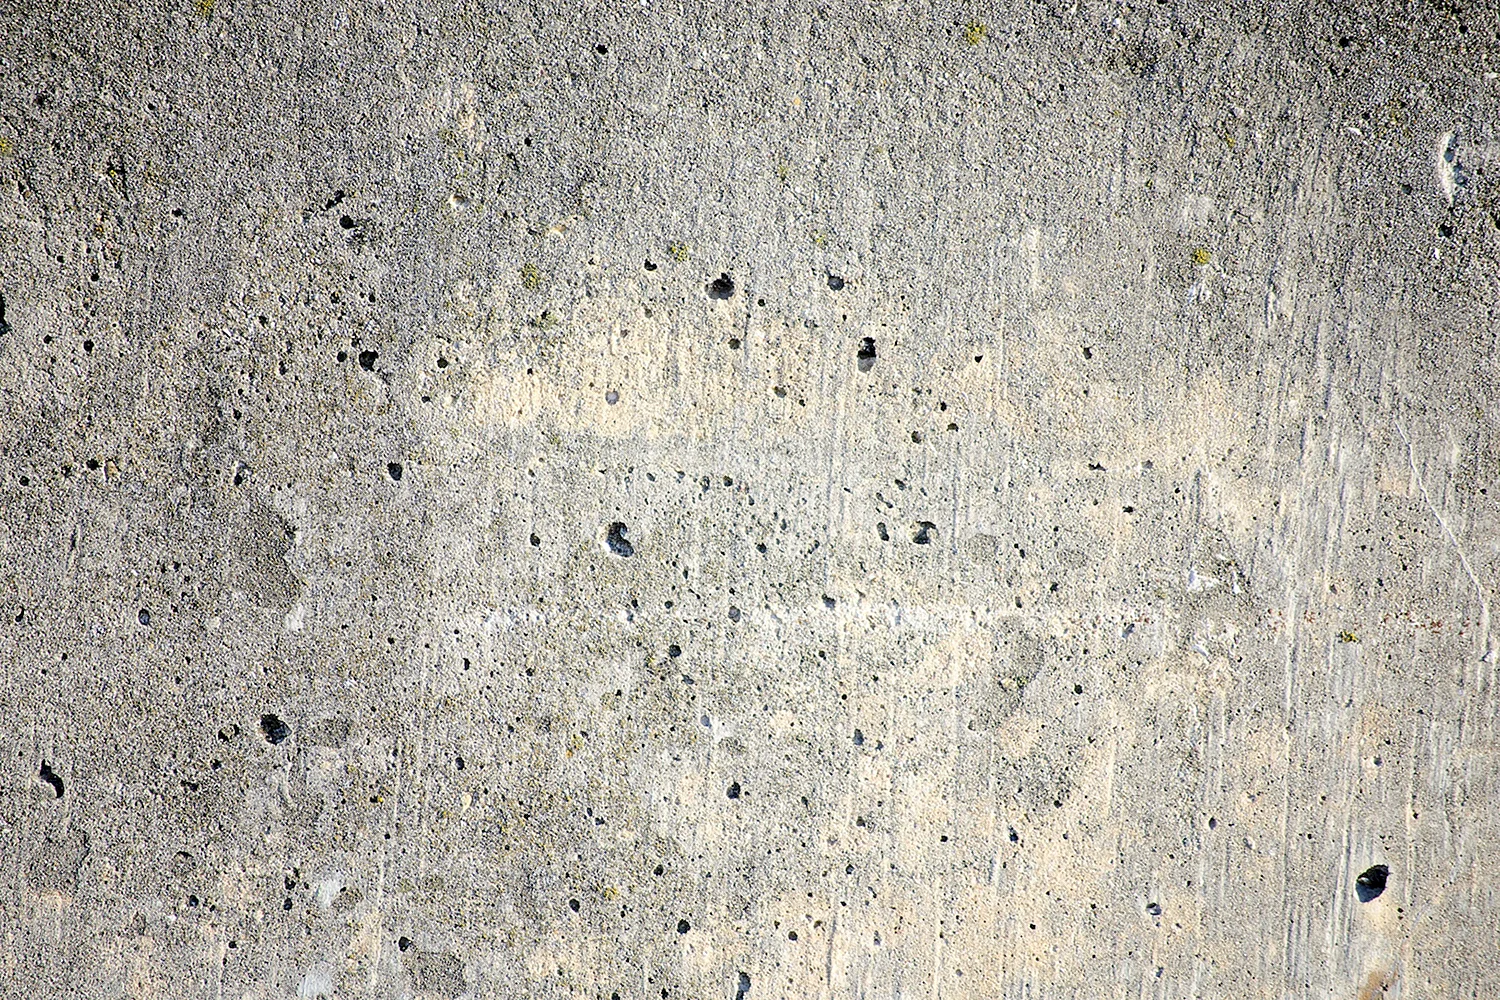 Тайловая текстура бетона